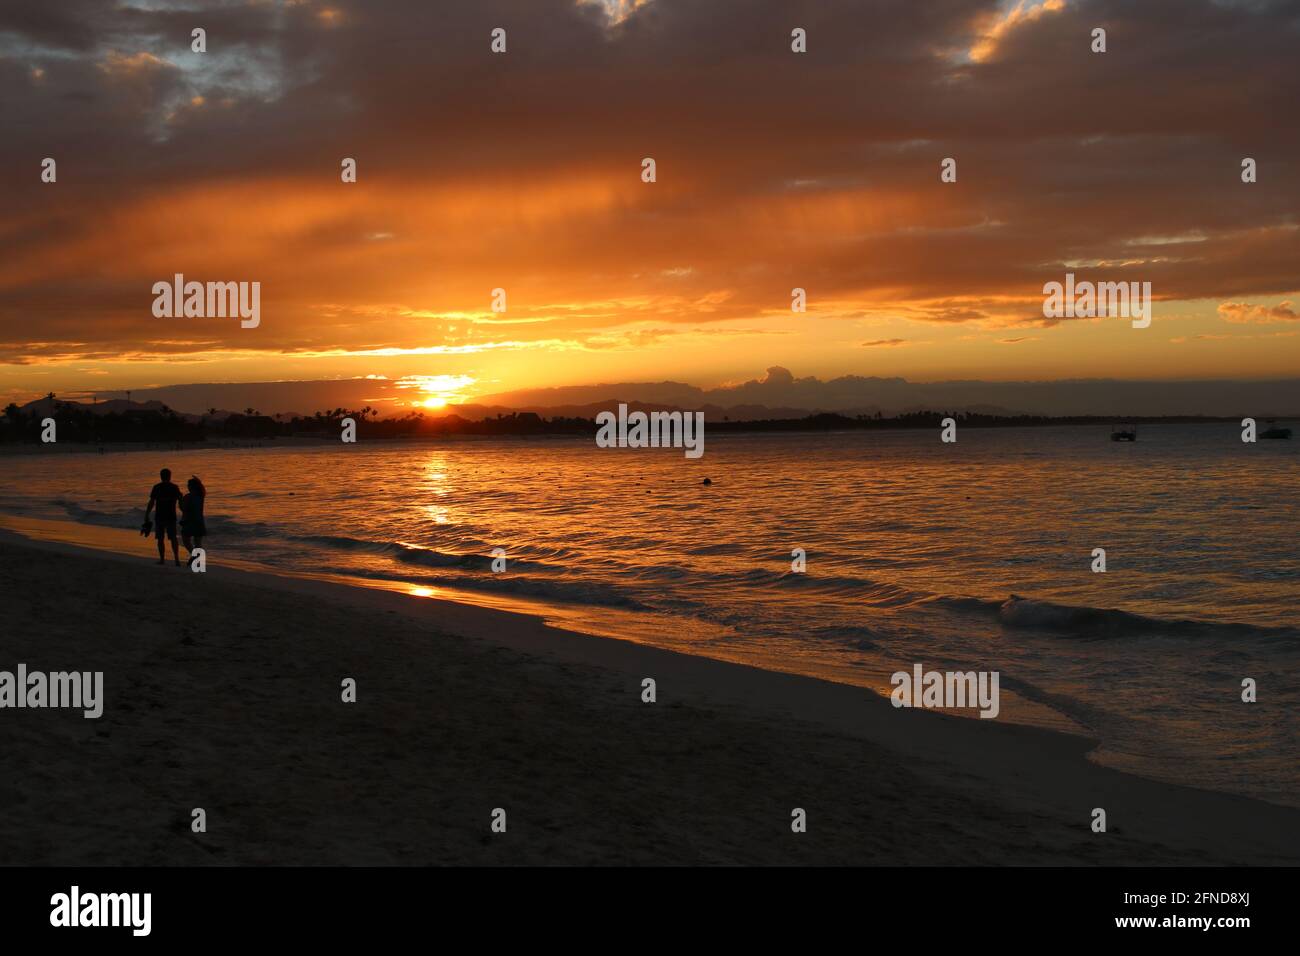 Sonnenuntergang in der Dominikanischen Republik bei Punta Cana/Repubblica Dominicana Foto Stock